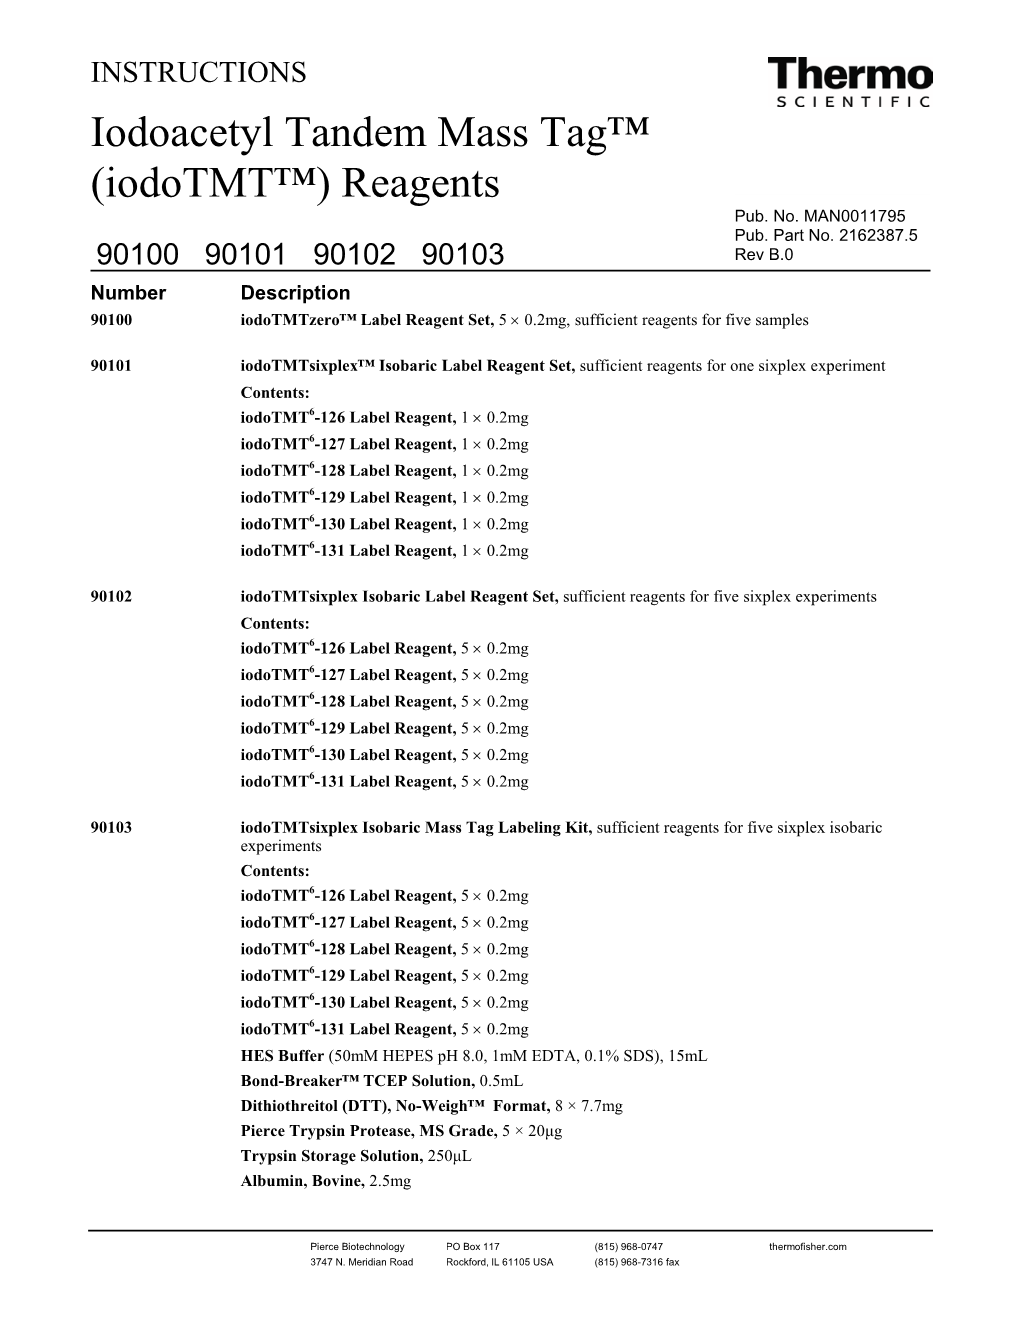 Iodoacetyl Tandem Mass Tag™ (Iodotmt™) Reagents